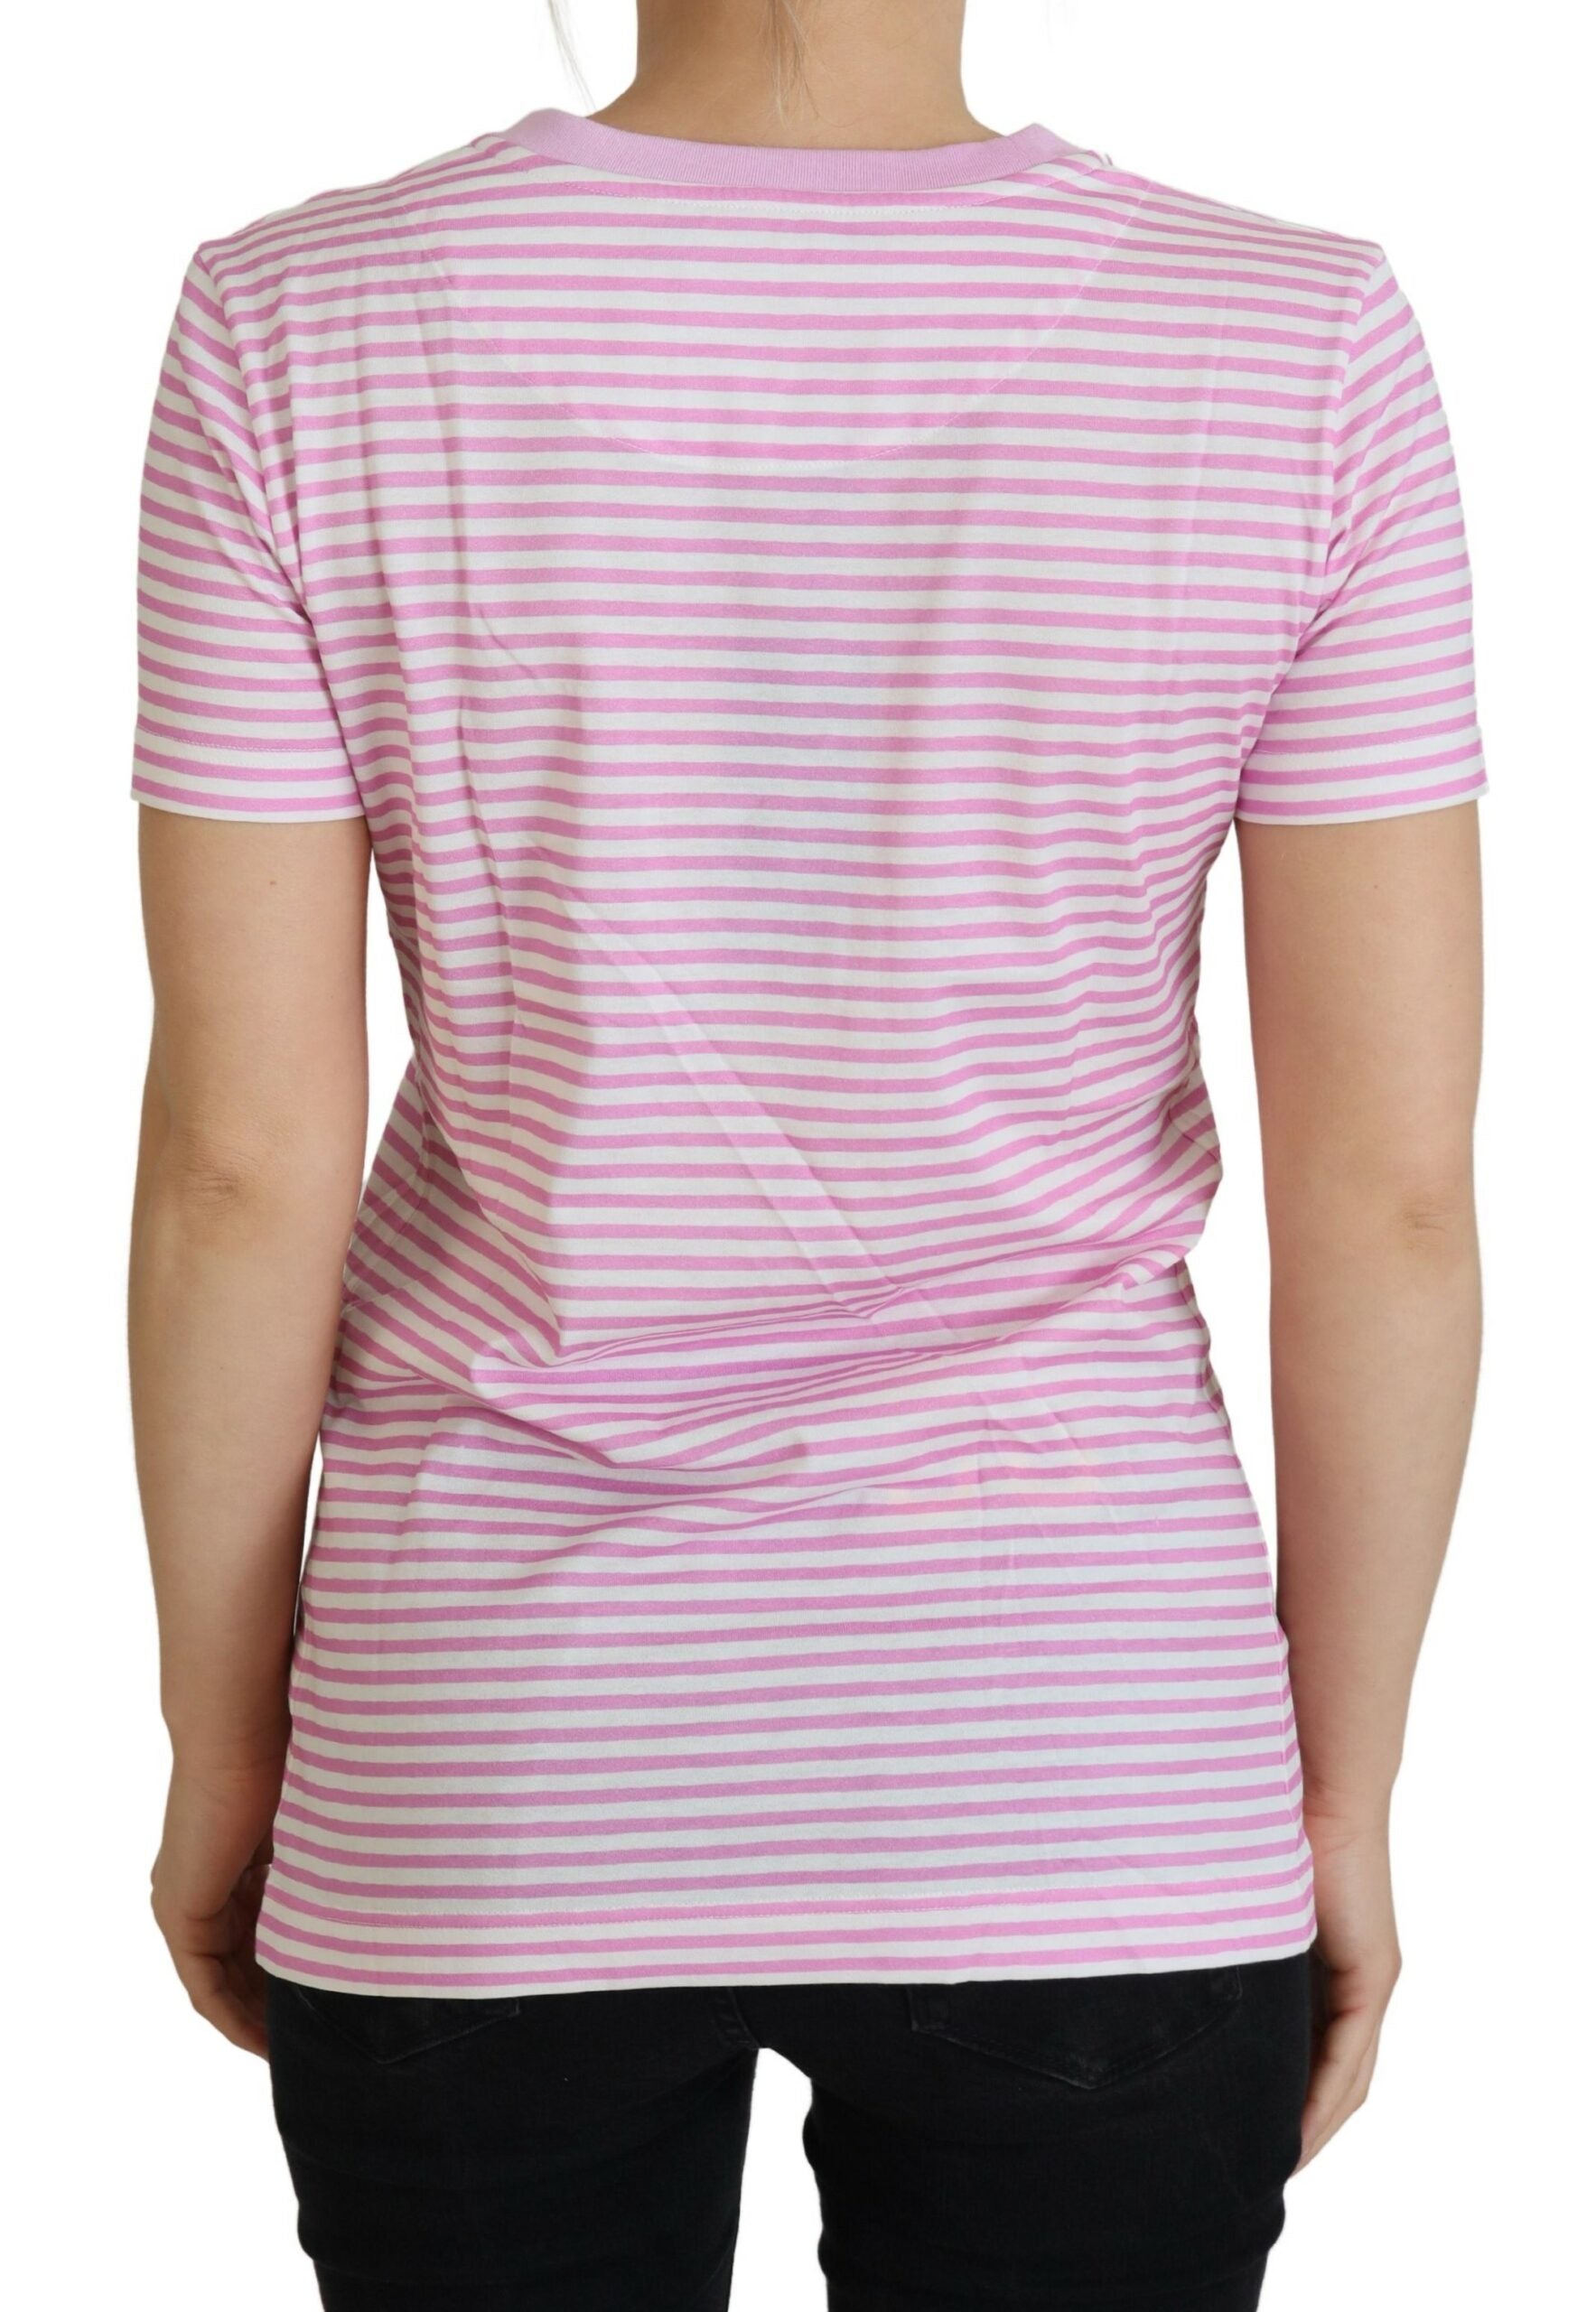 Dolce &amp; Gabbana White Pink CANNES Ексклузивна тениска